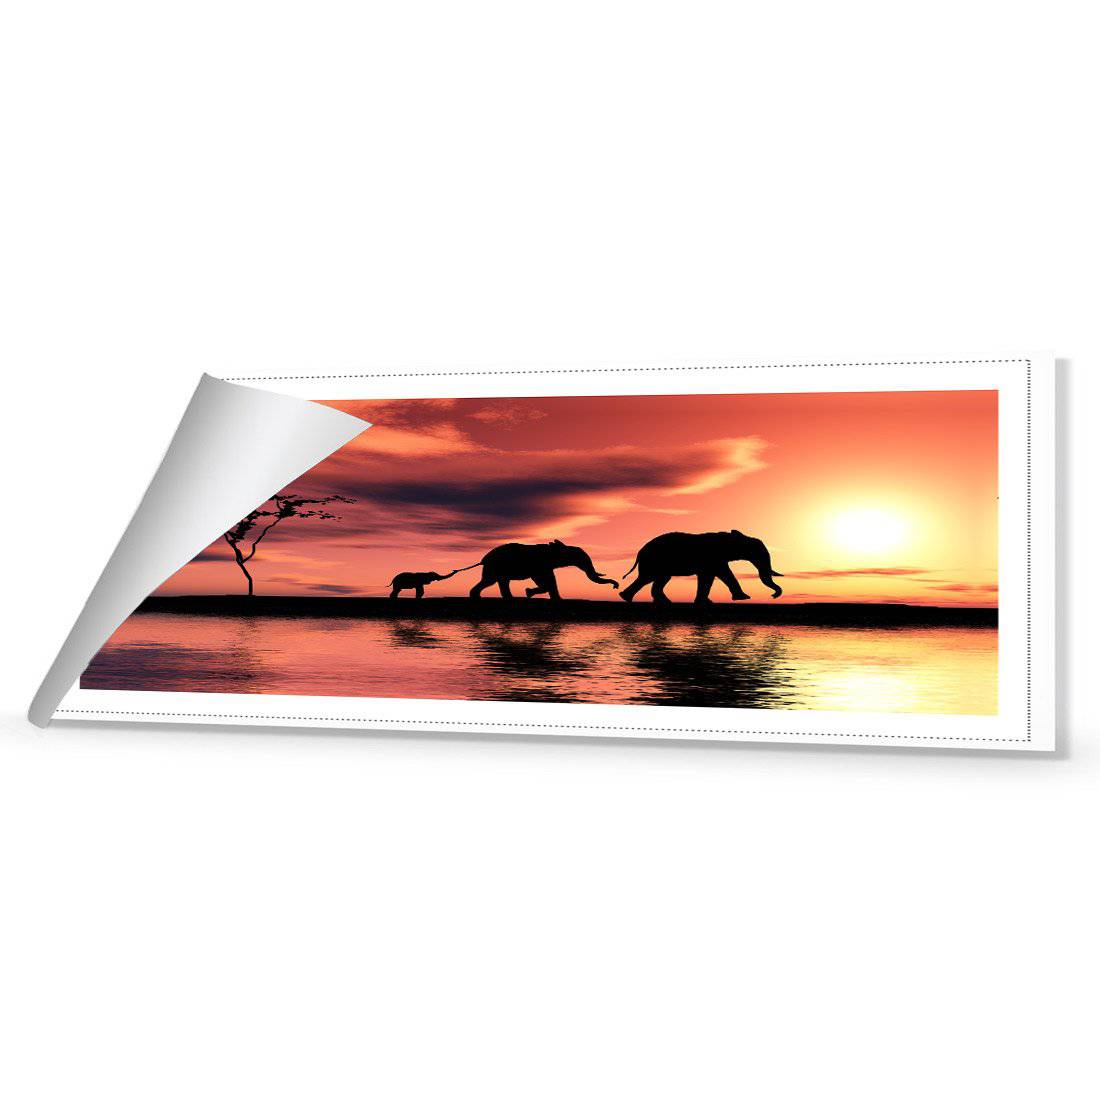 Family of Elephants at Sunset Canvas Art-Canvas-Wall Art Designs-60x20cm-Rolled Canvas-Wall Art Designs